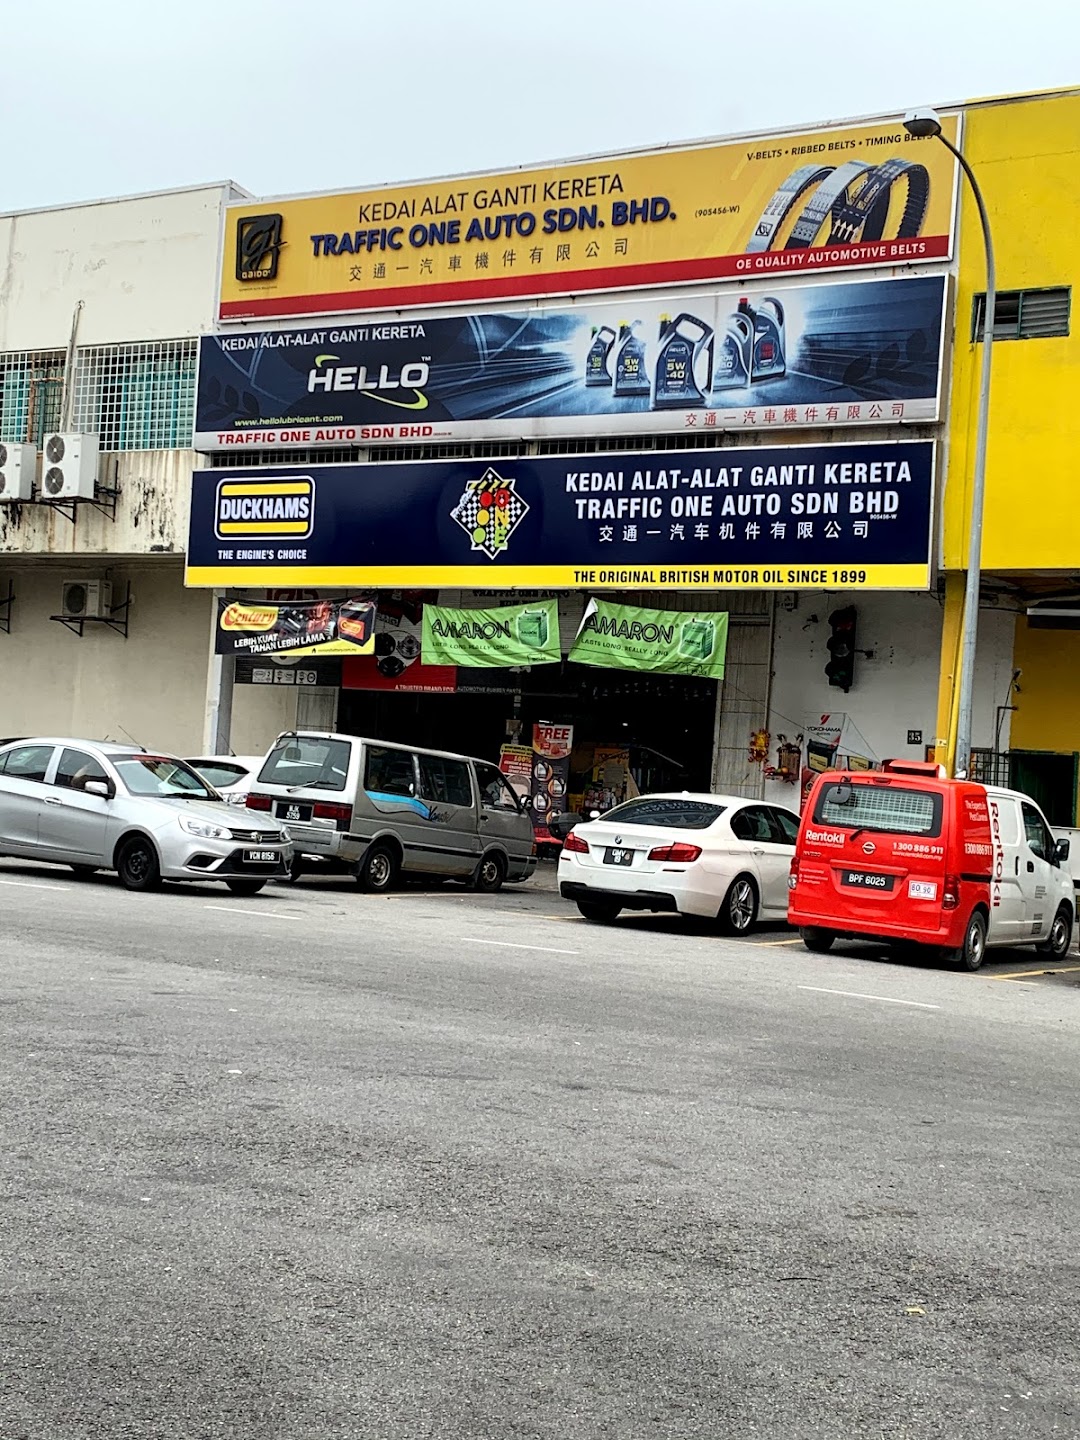 Traffic One Auto Sdn Bhd